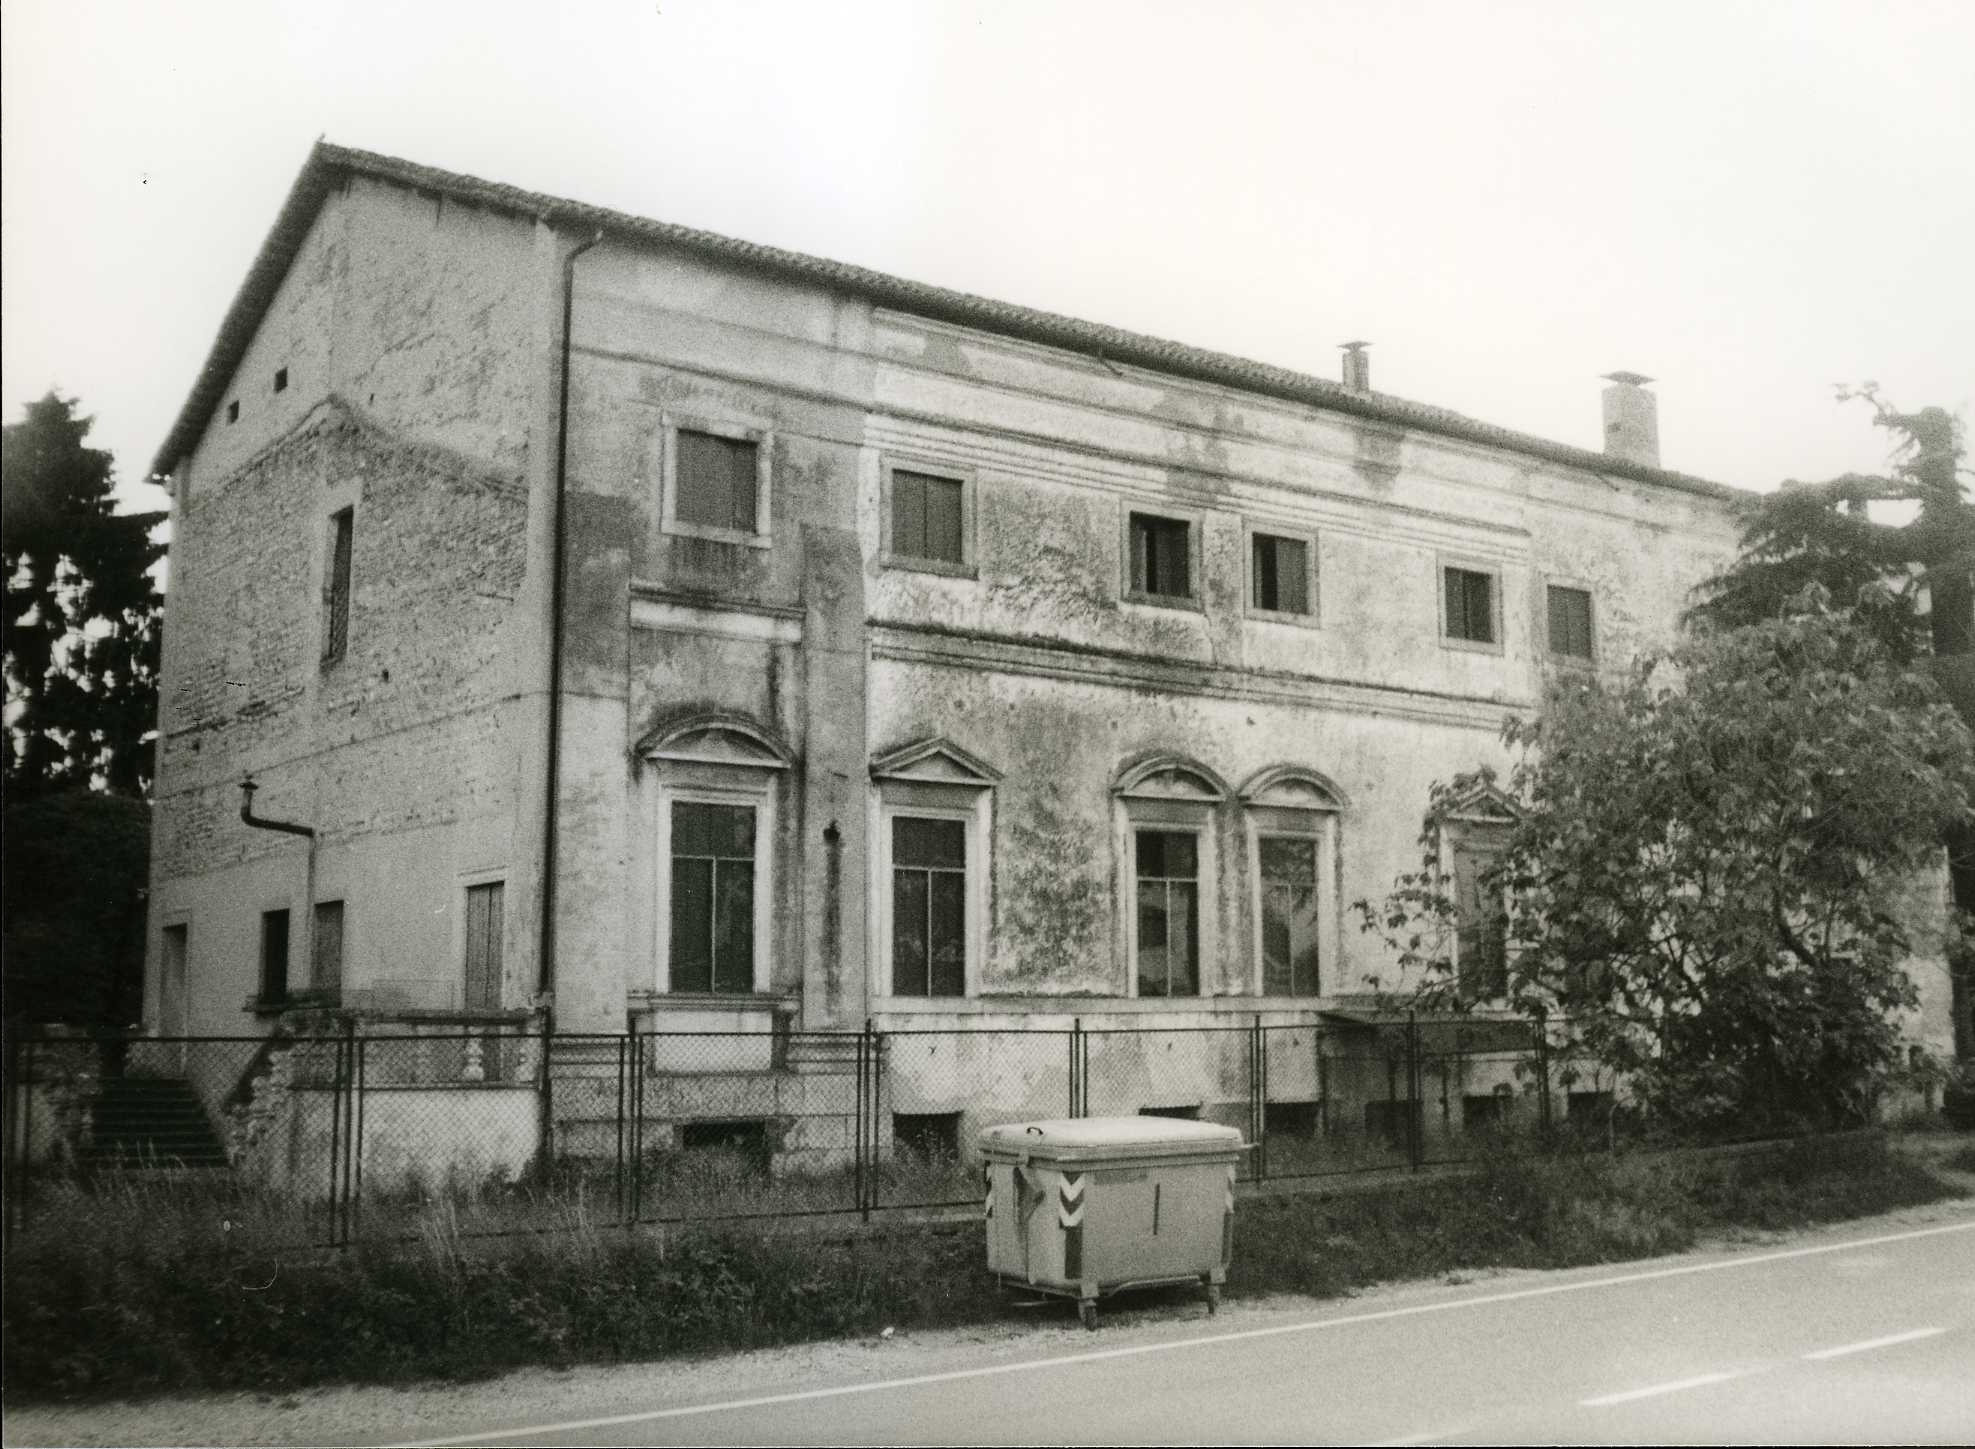 Villa Trissino Pozzato (villa) - Sandrigo (VI)  (XVIII)